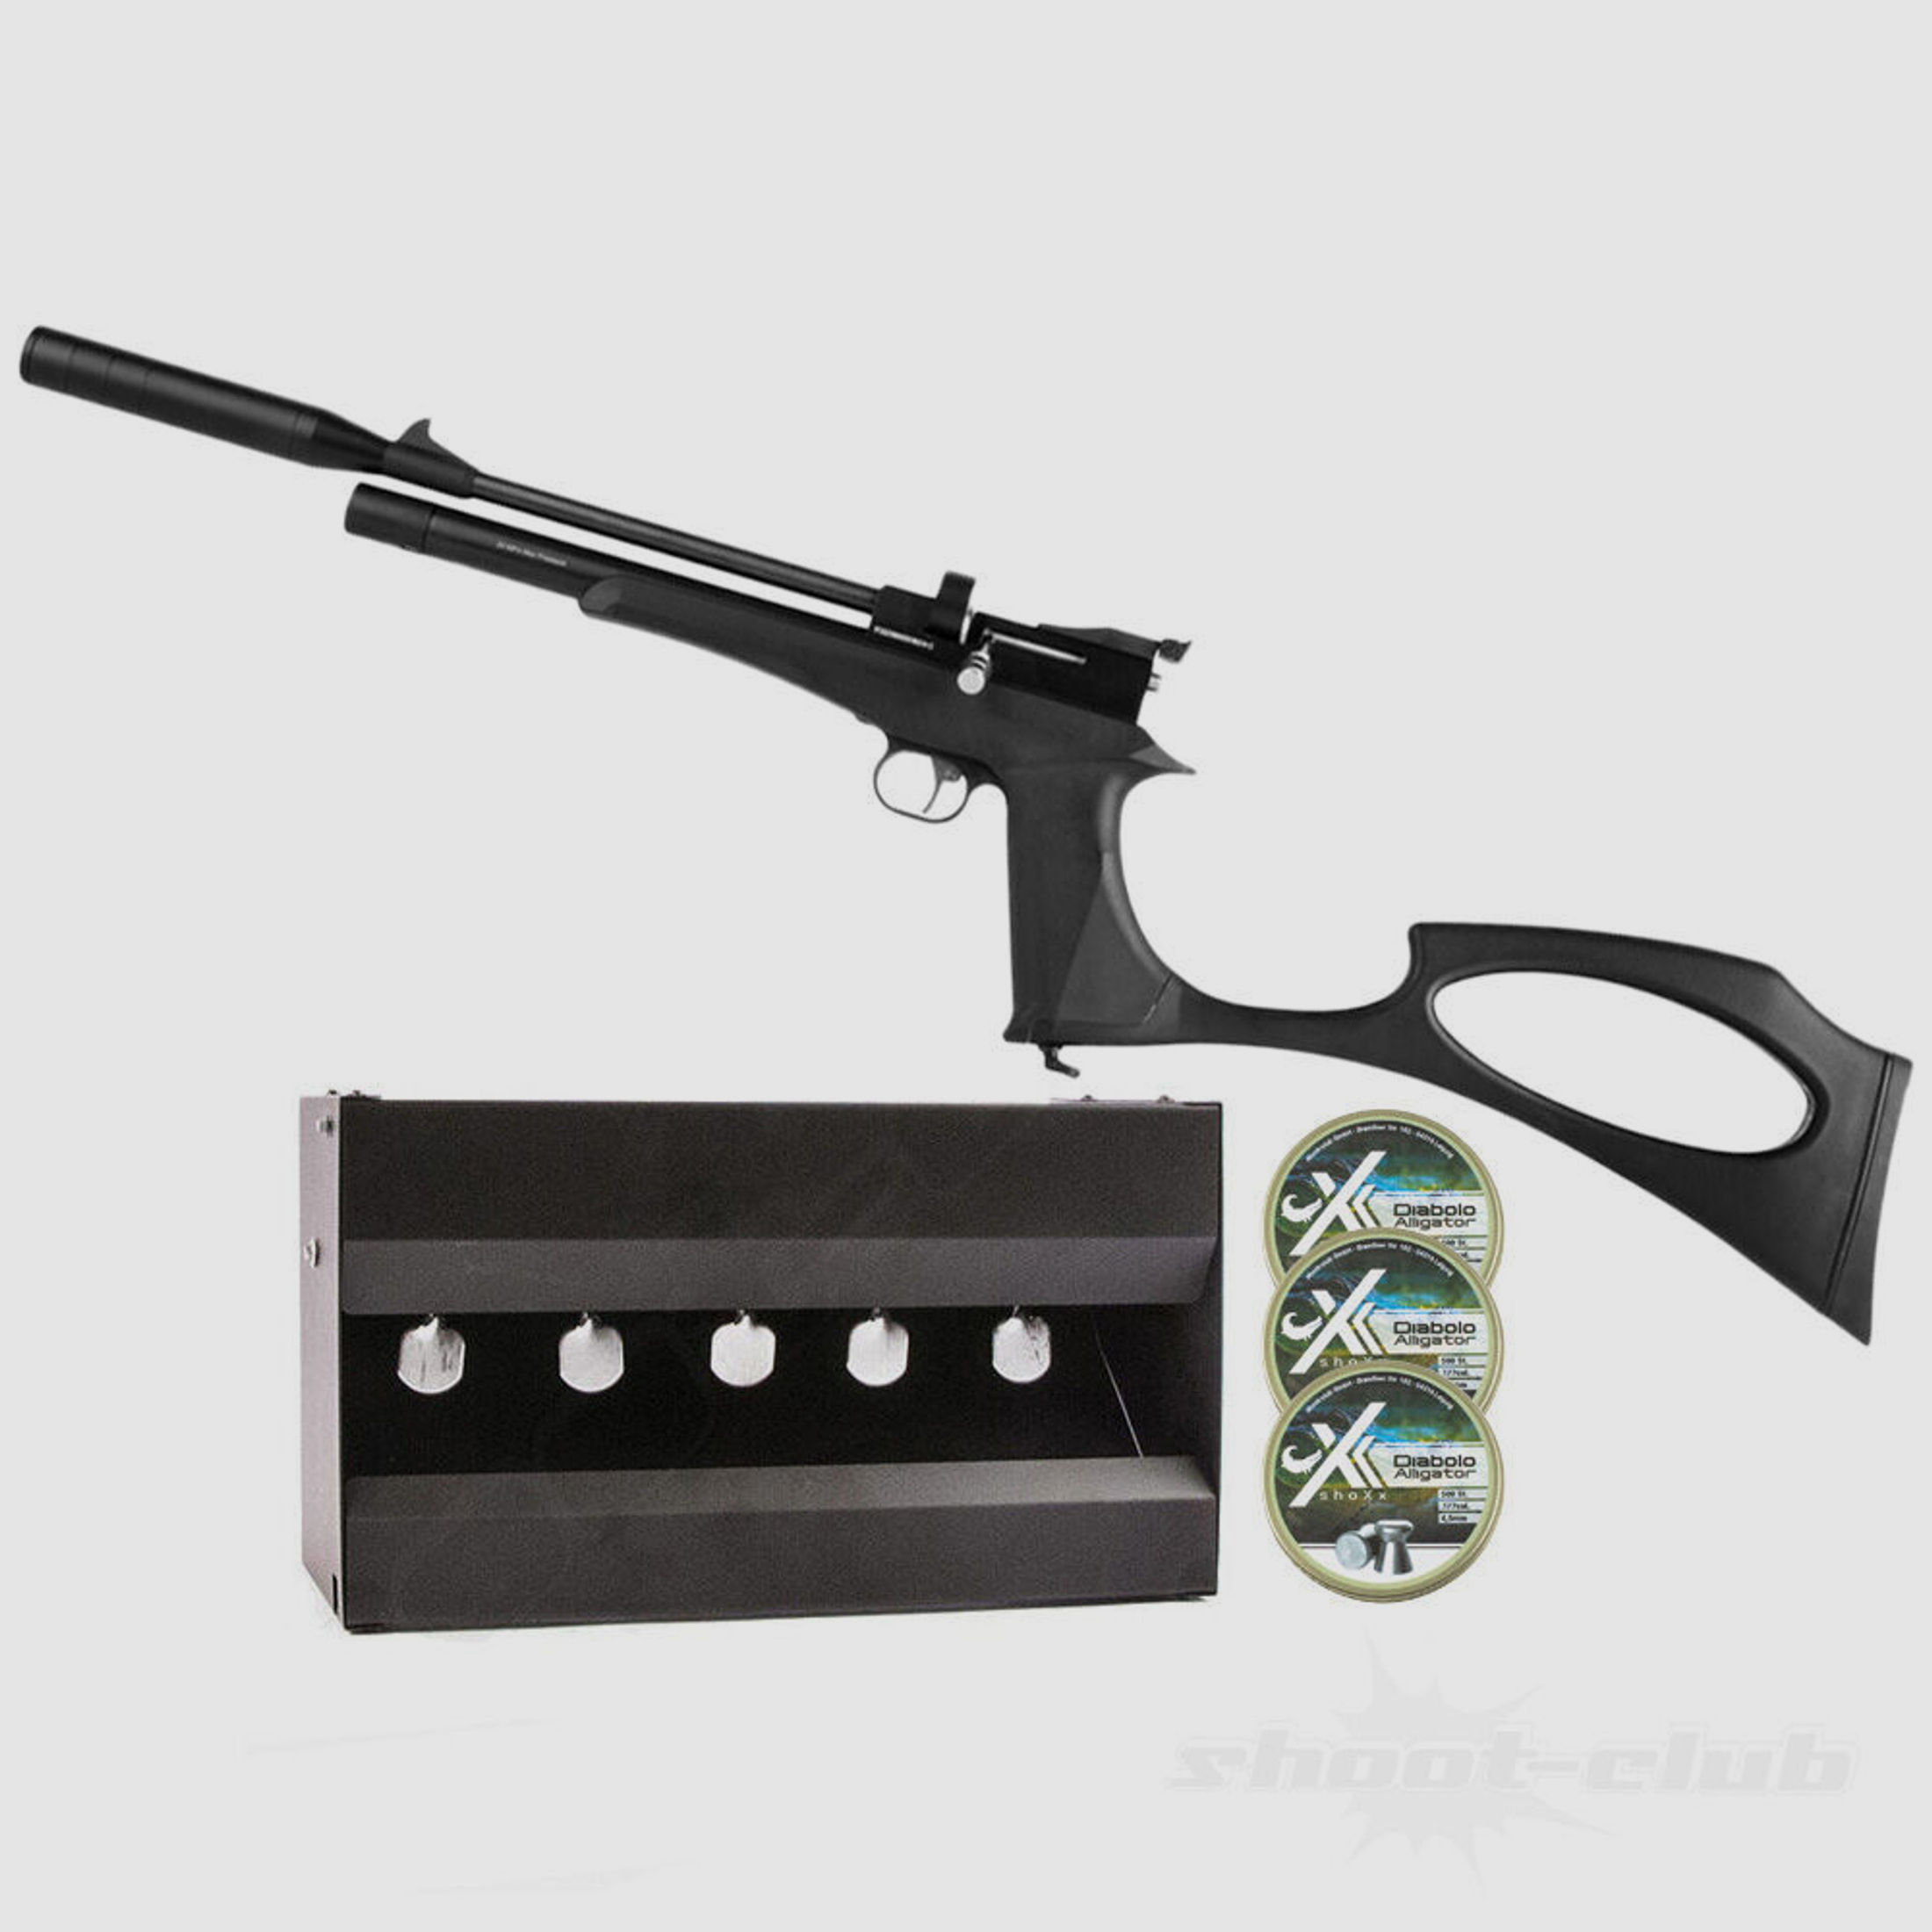 Diana Bandit Black Pressluftpistole 4,5mm Diabolos Plinking-Set